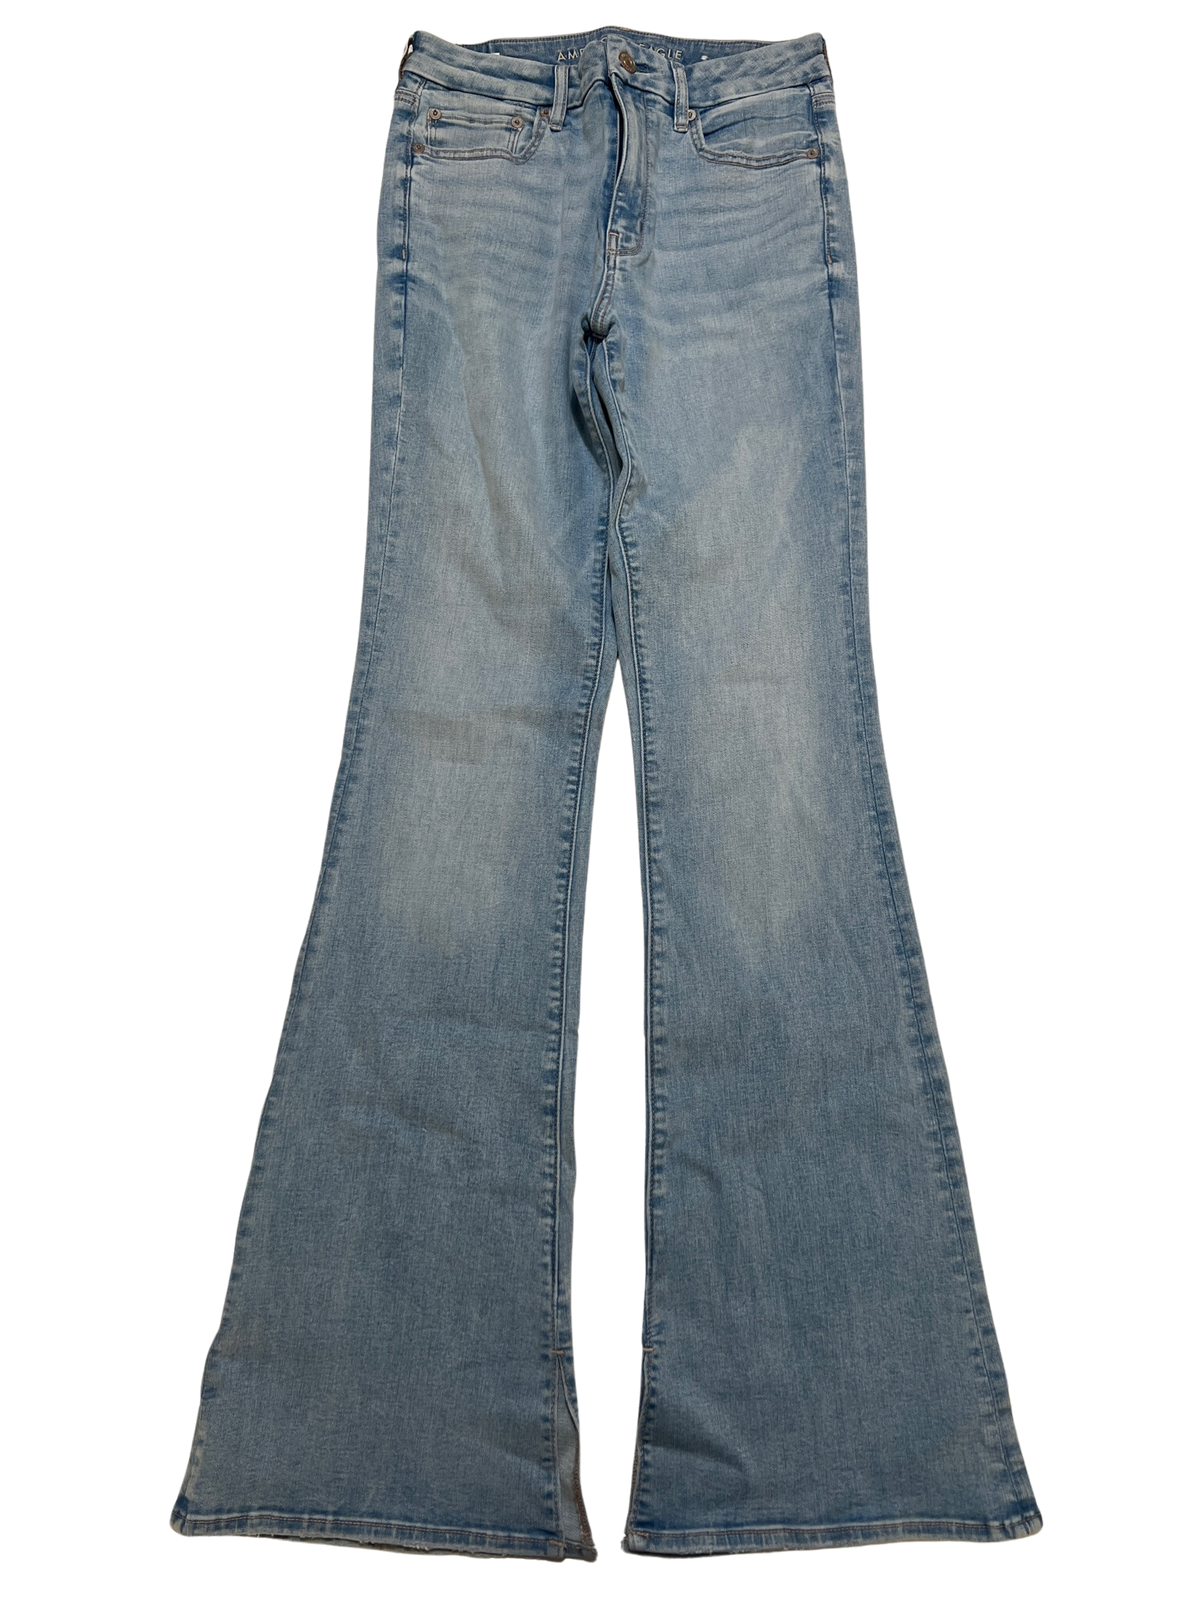 American Eagle- Light Wash Flare Jeans